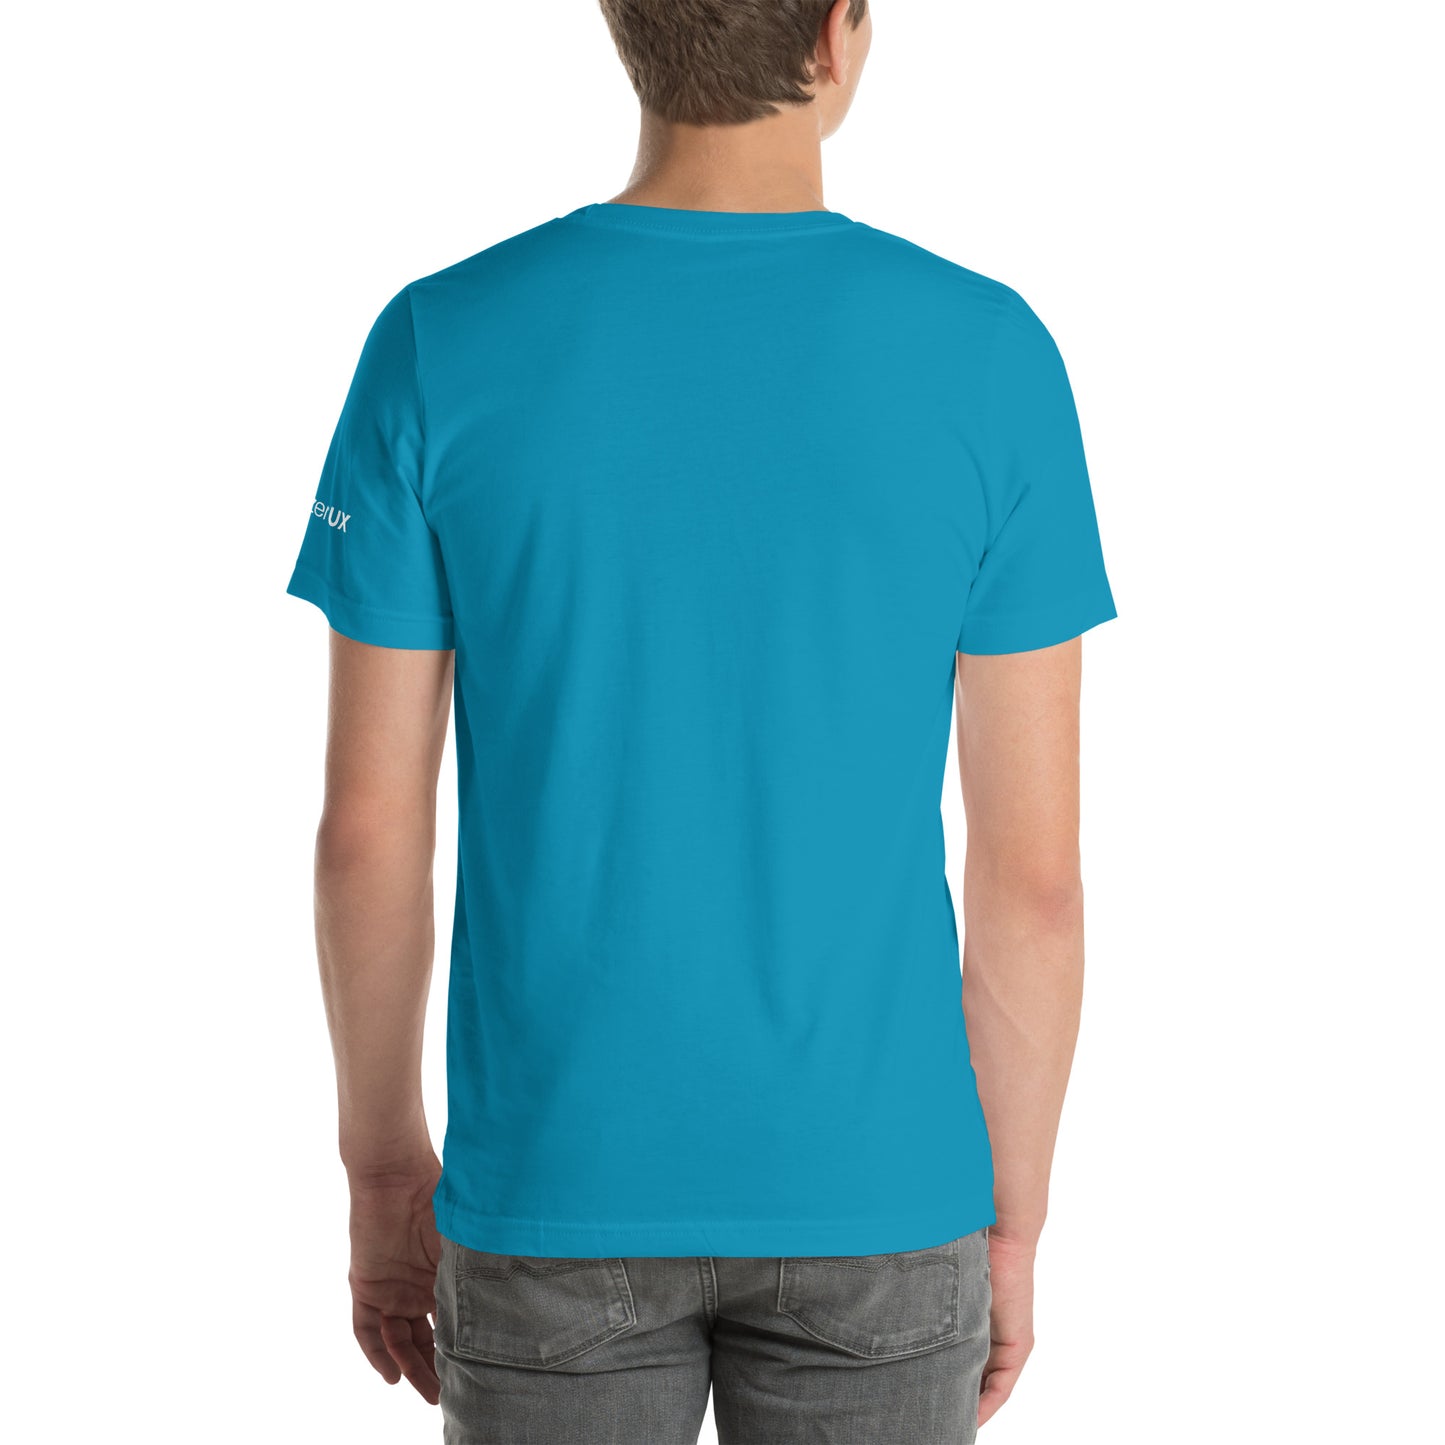 UX ≠ UI Unisex T-shirt #1